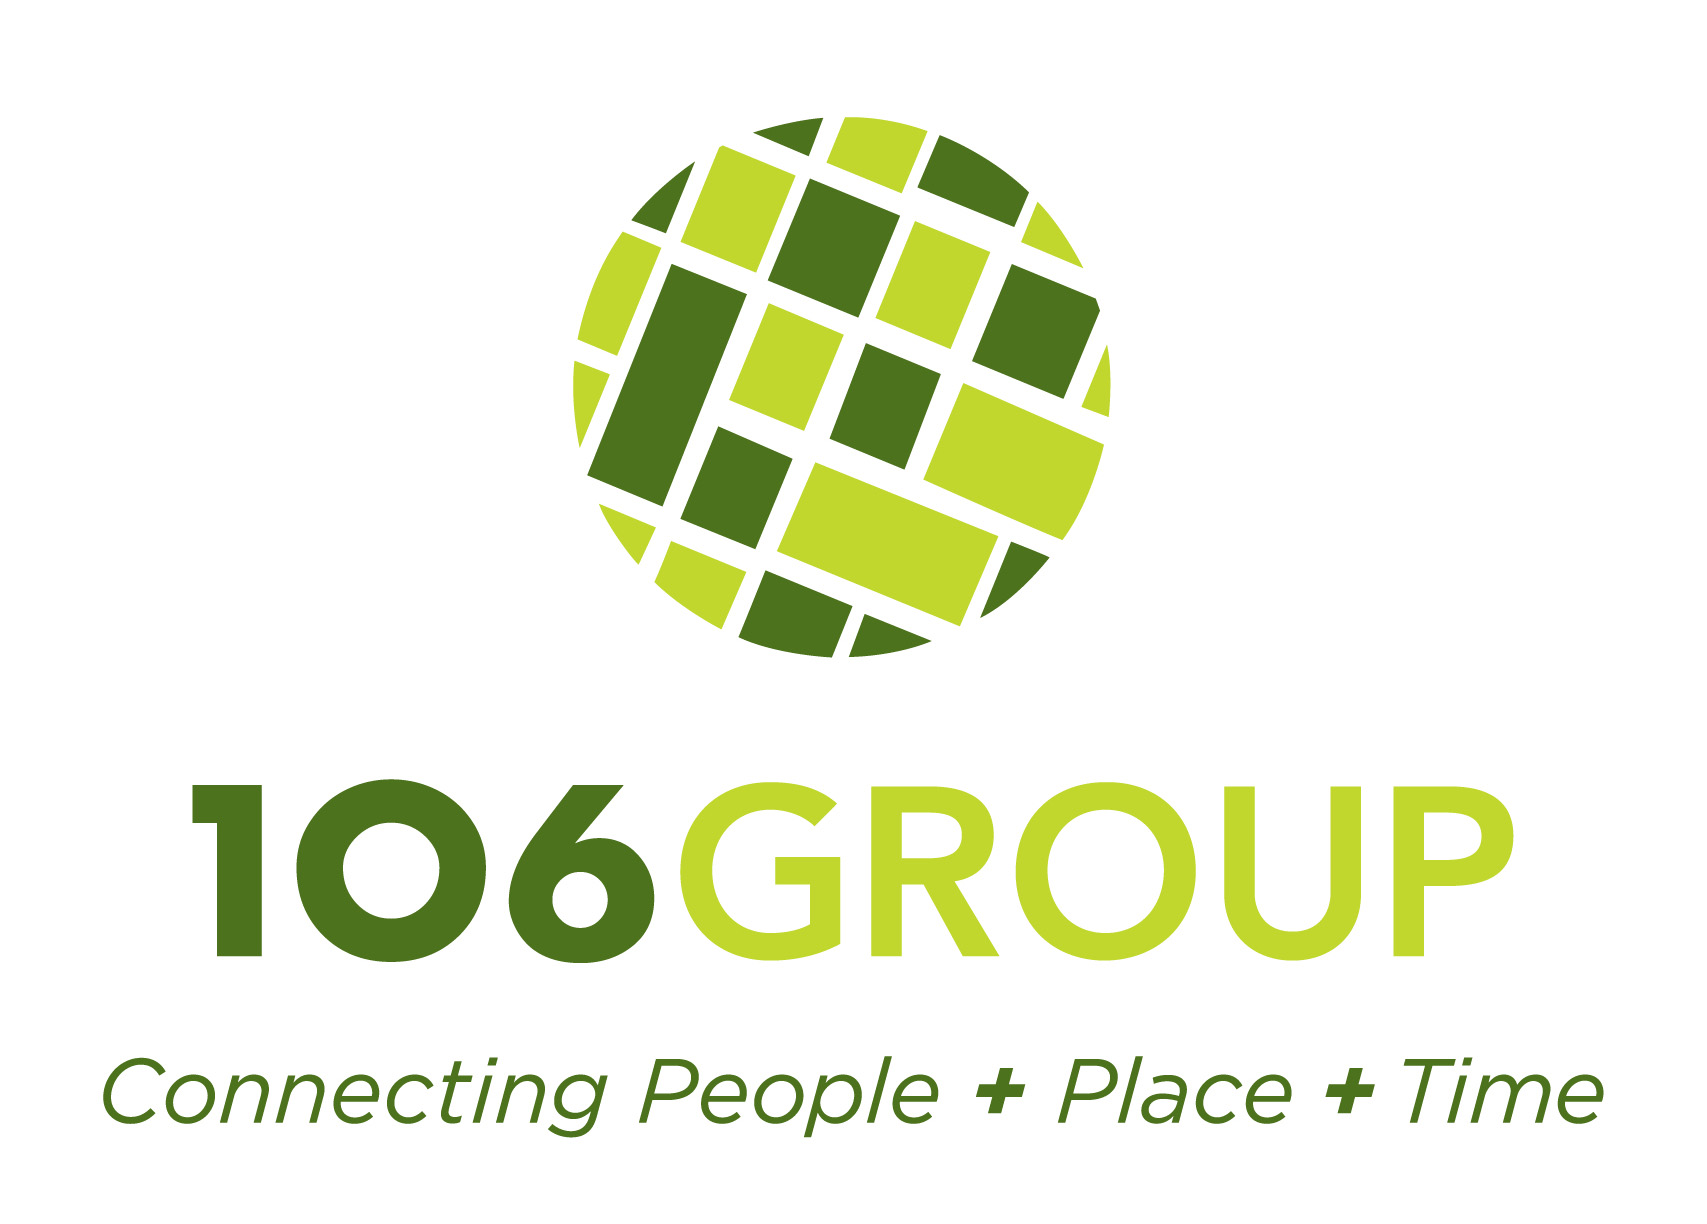 106 Group